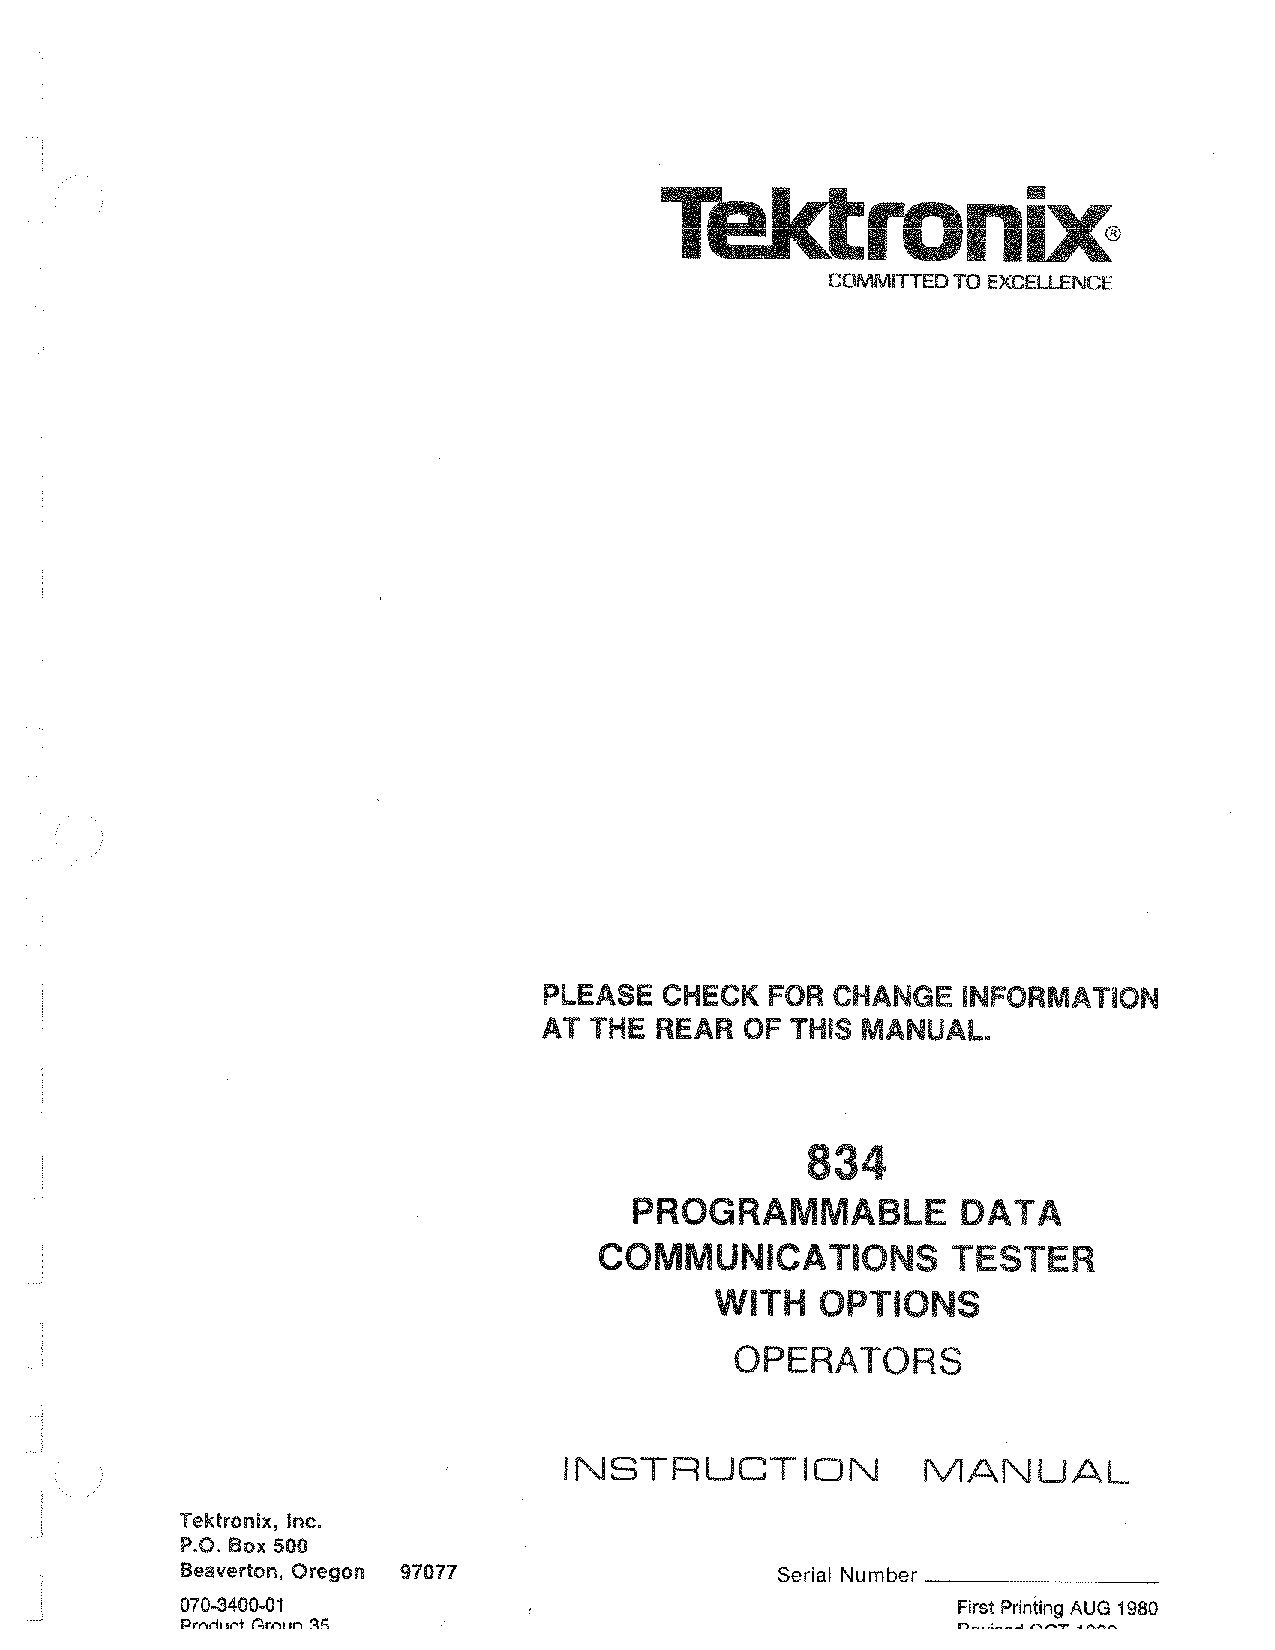 Tektronix 834 User Manual